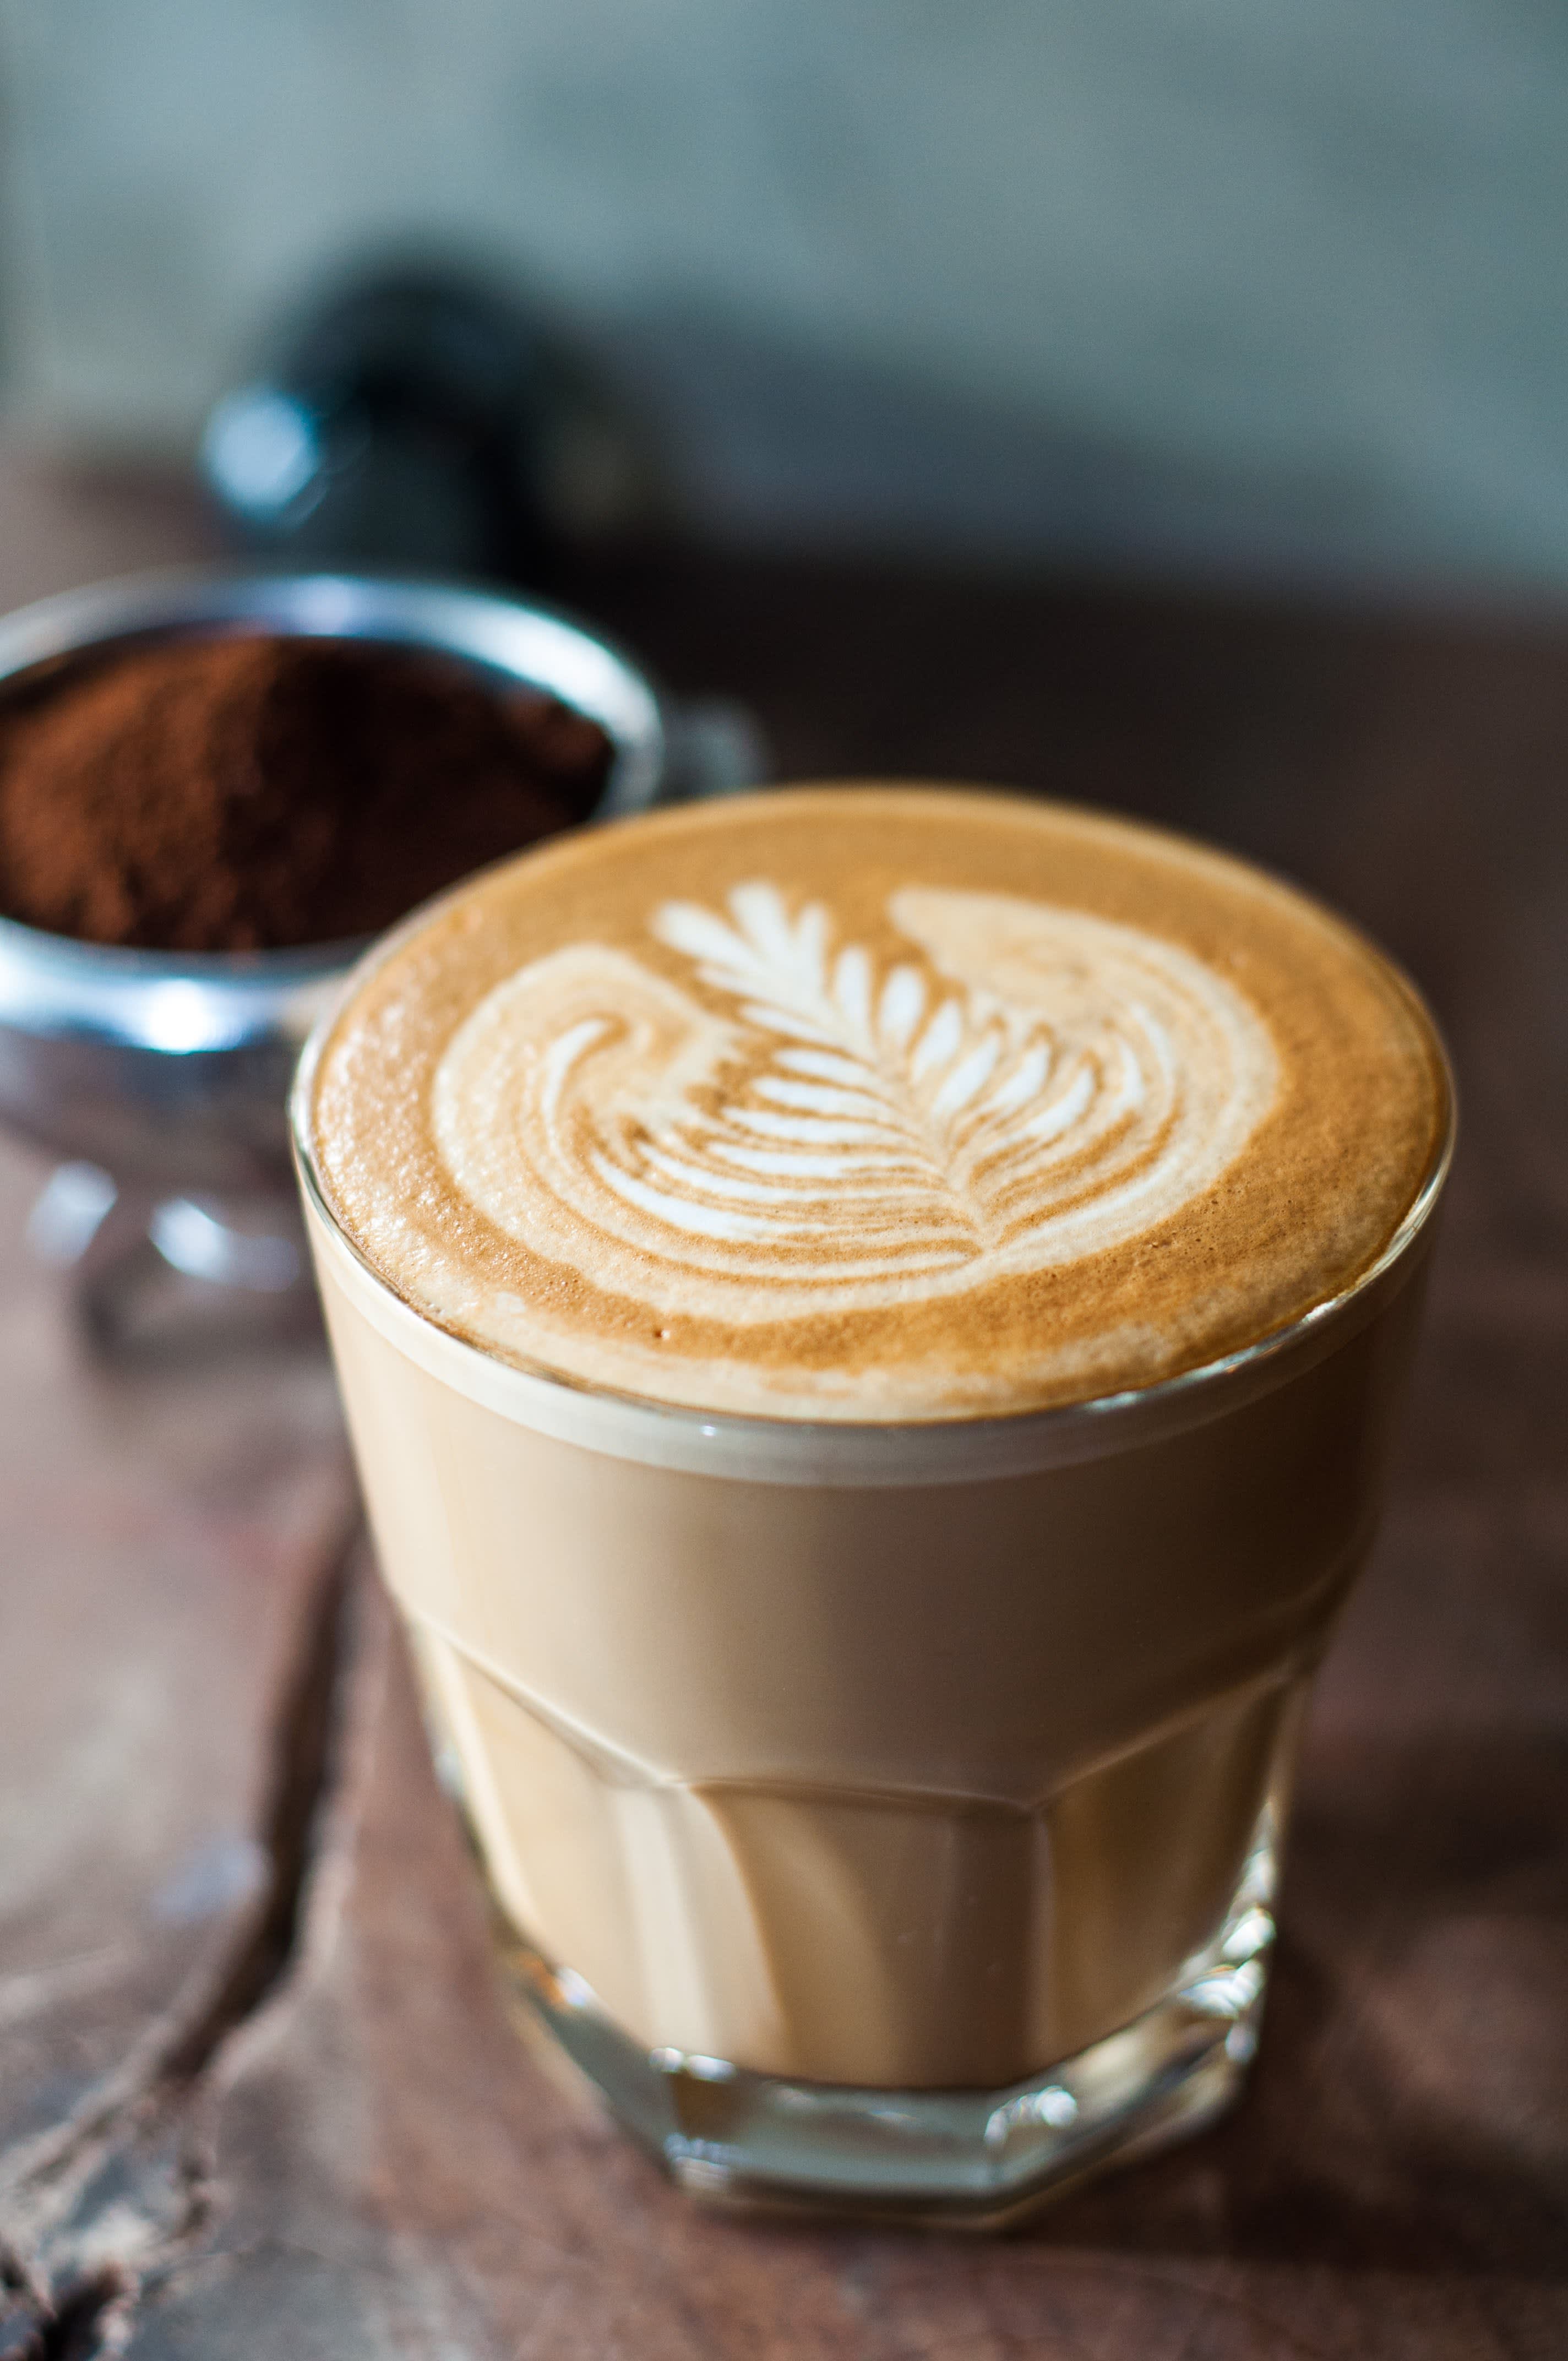 Share your best latte art - cortado